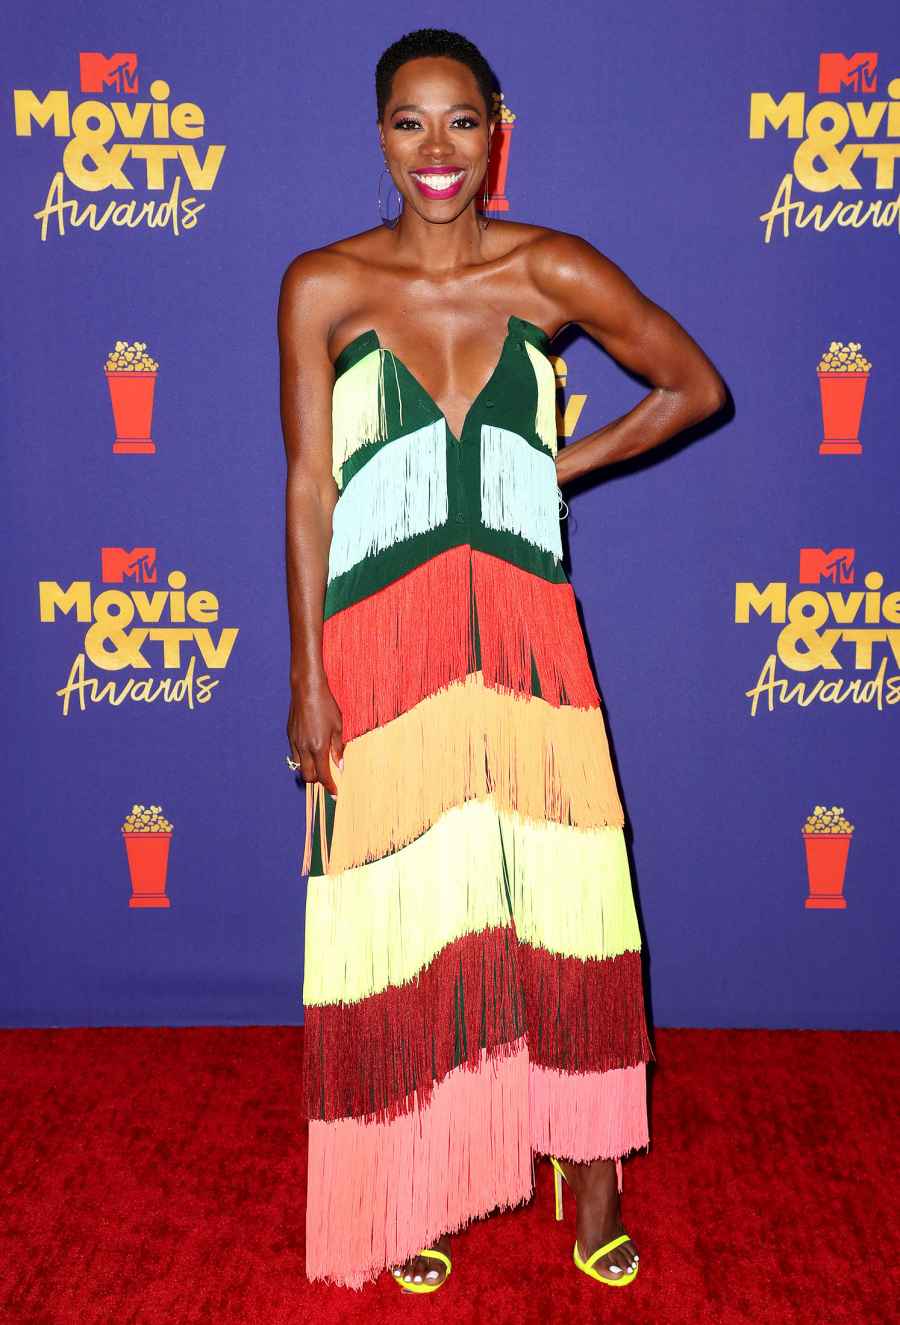 MTV Movie & TV Awards Red Carpet Arrivals - Yvonne Orji